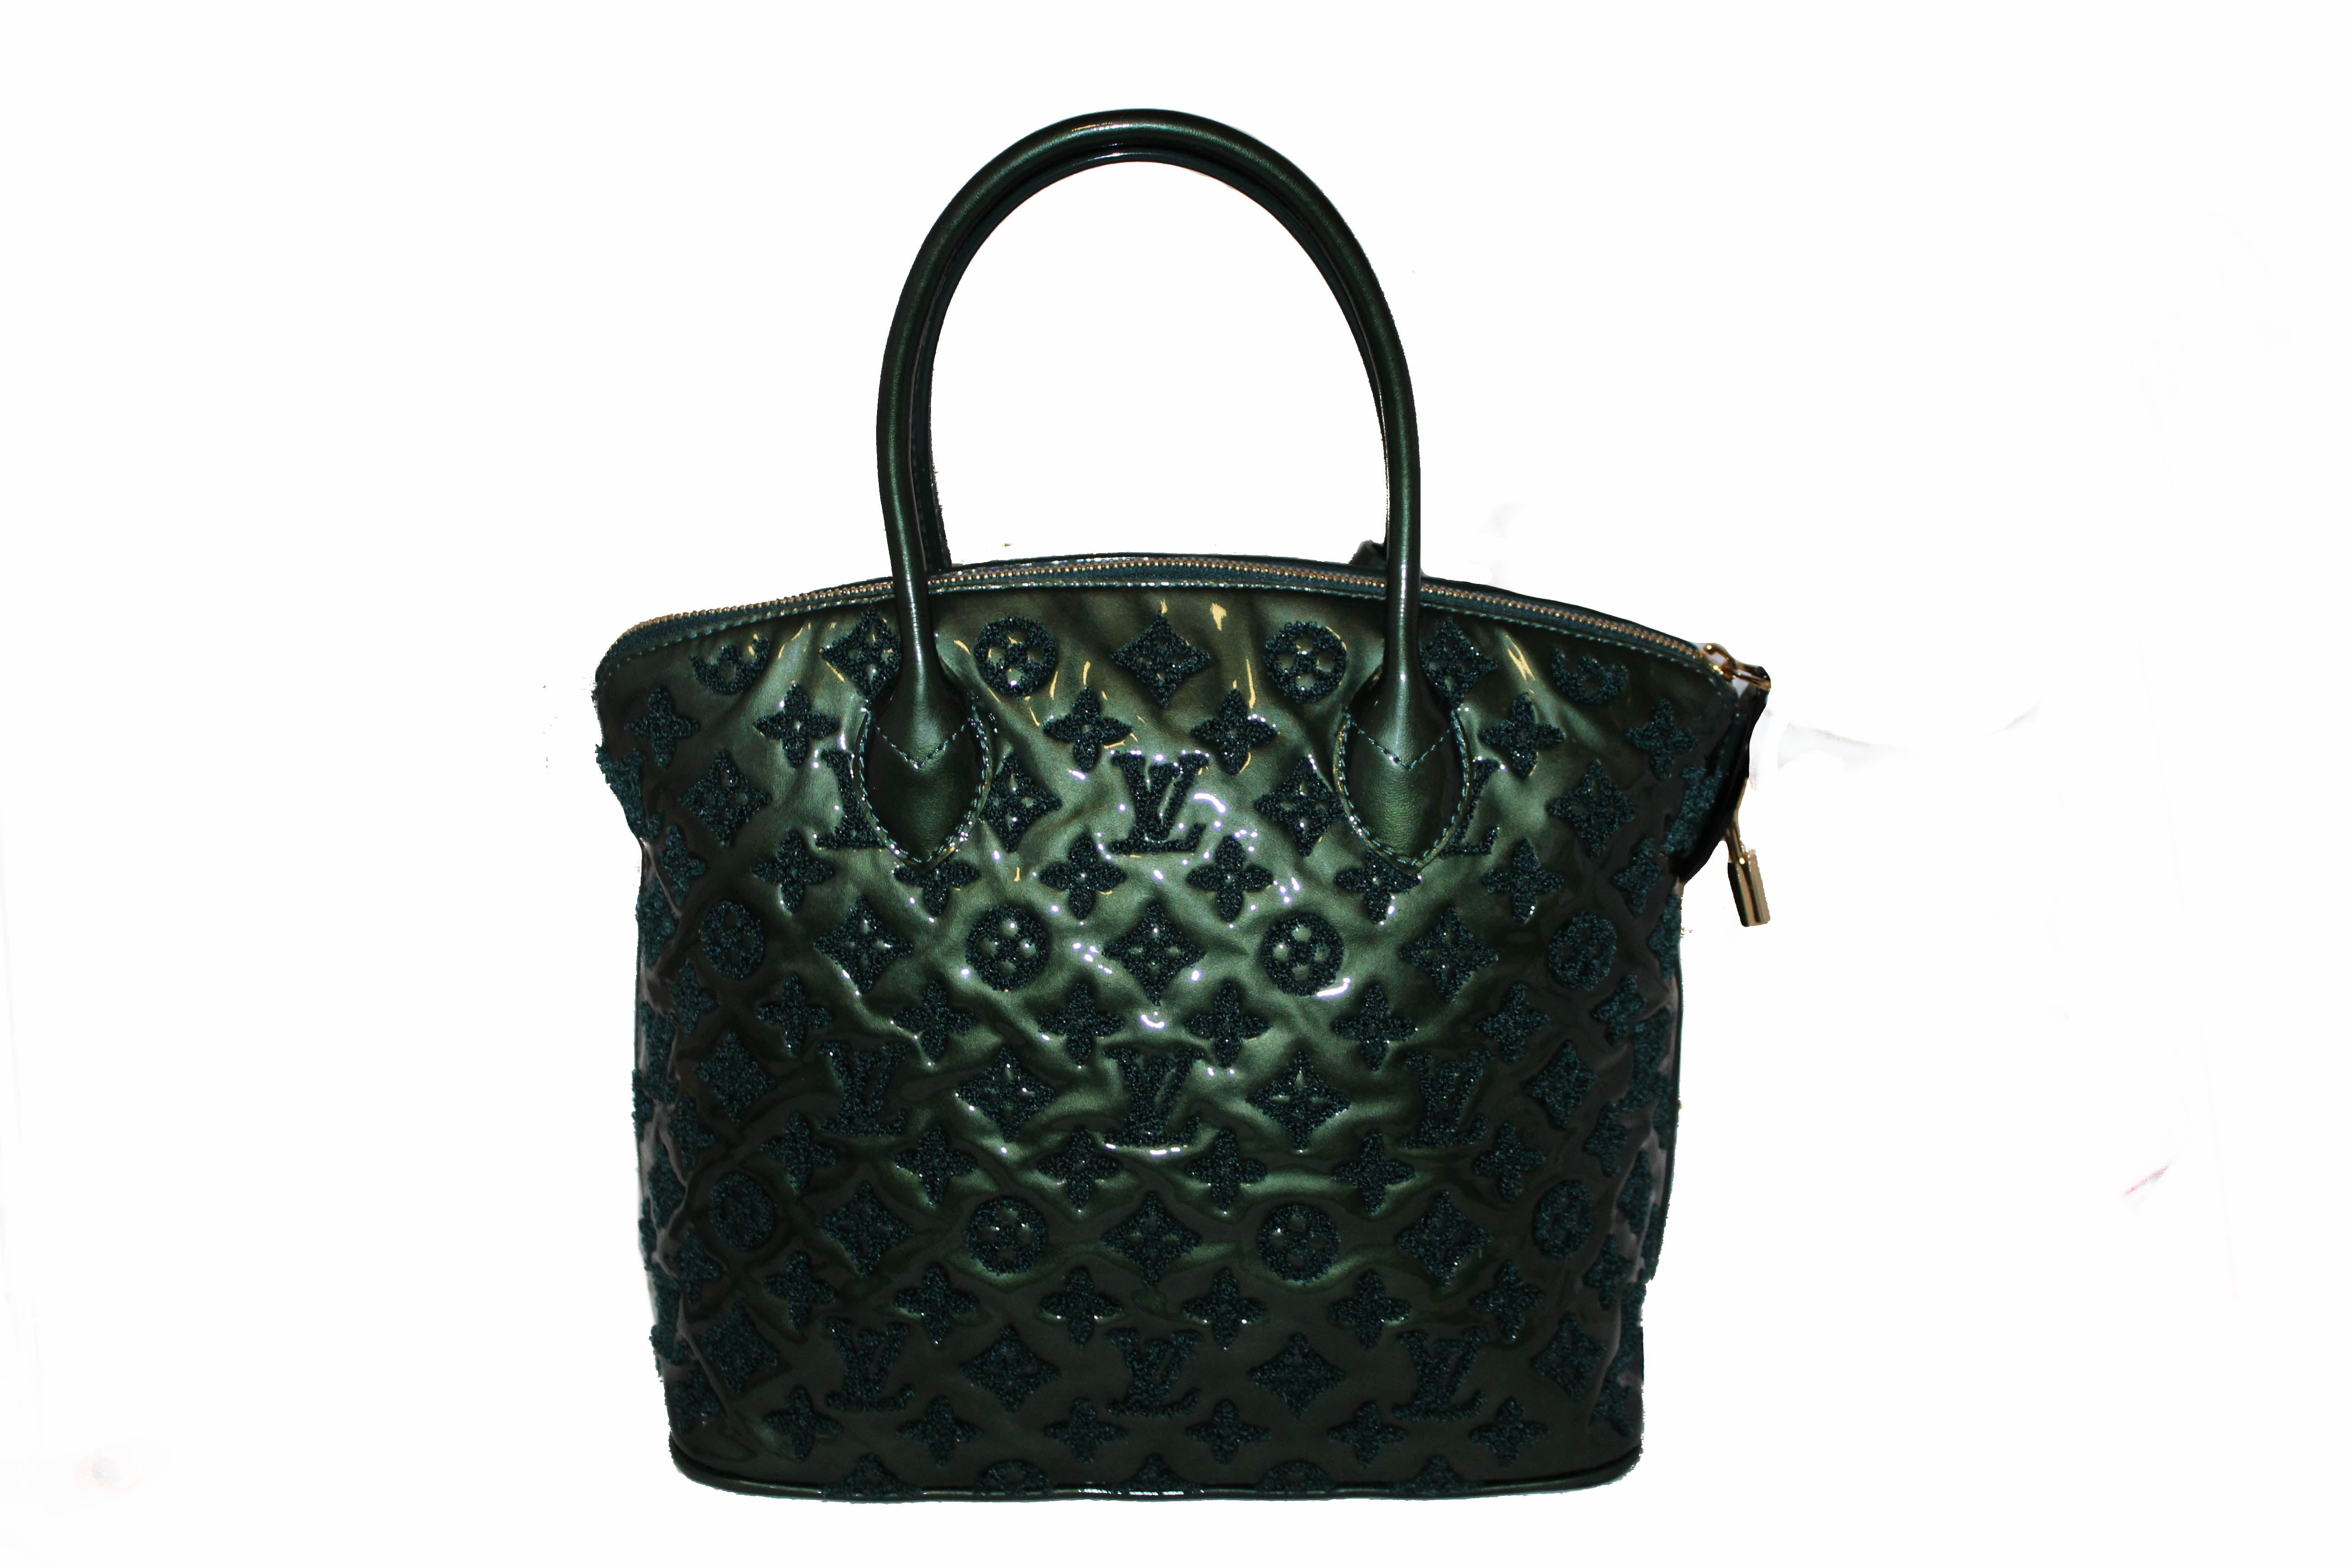 Authentic Louis Vuitton Green Monogram Limited Edition Green Monogram Fascination Lockit Handbag